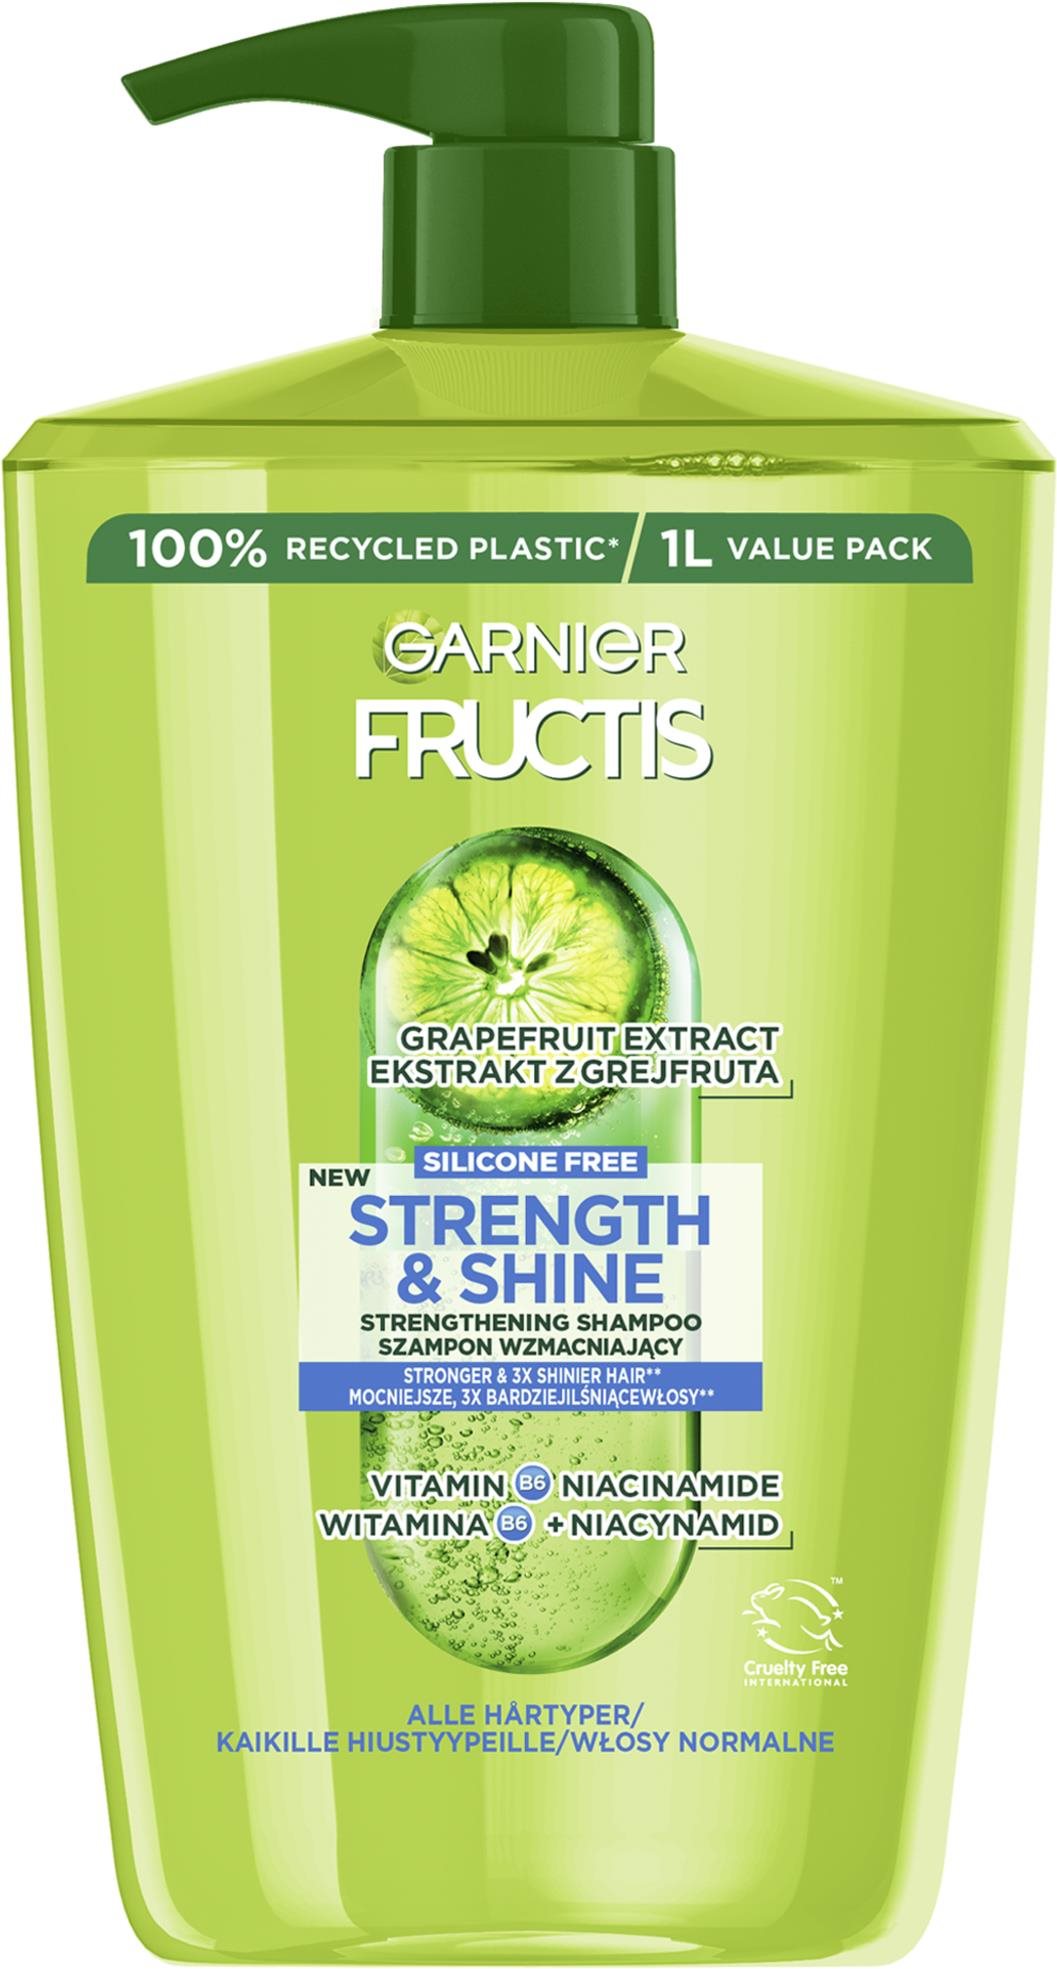 GARNIER Fructis Strength & Shine sampon 1000 ml